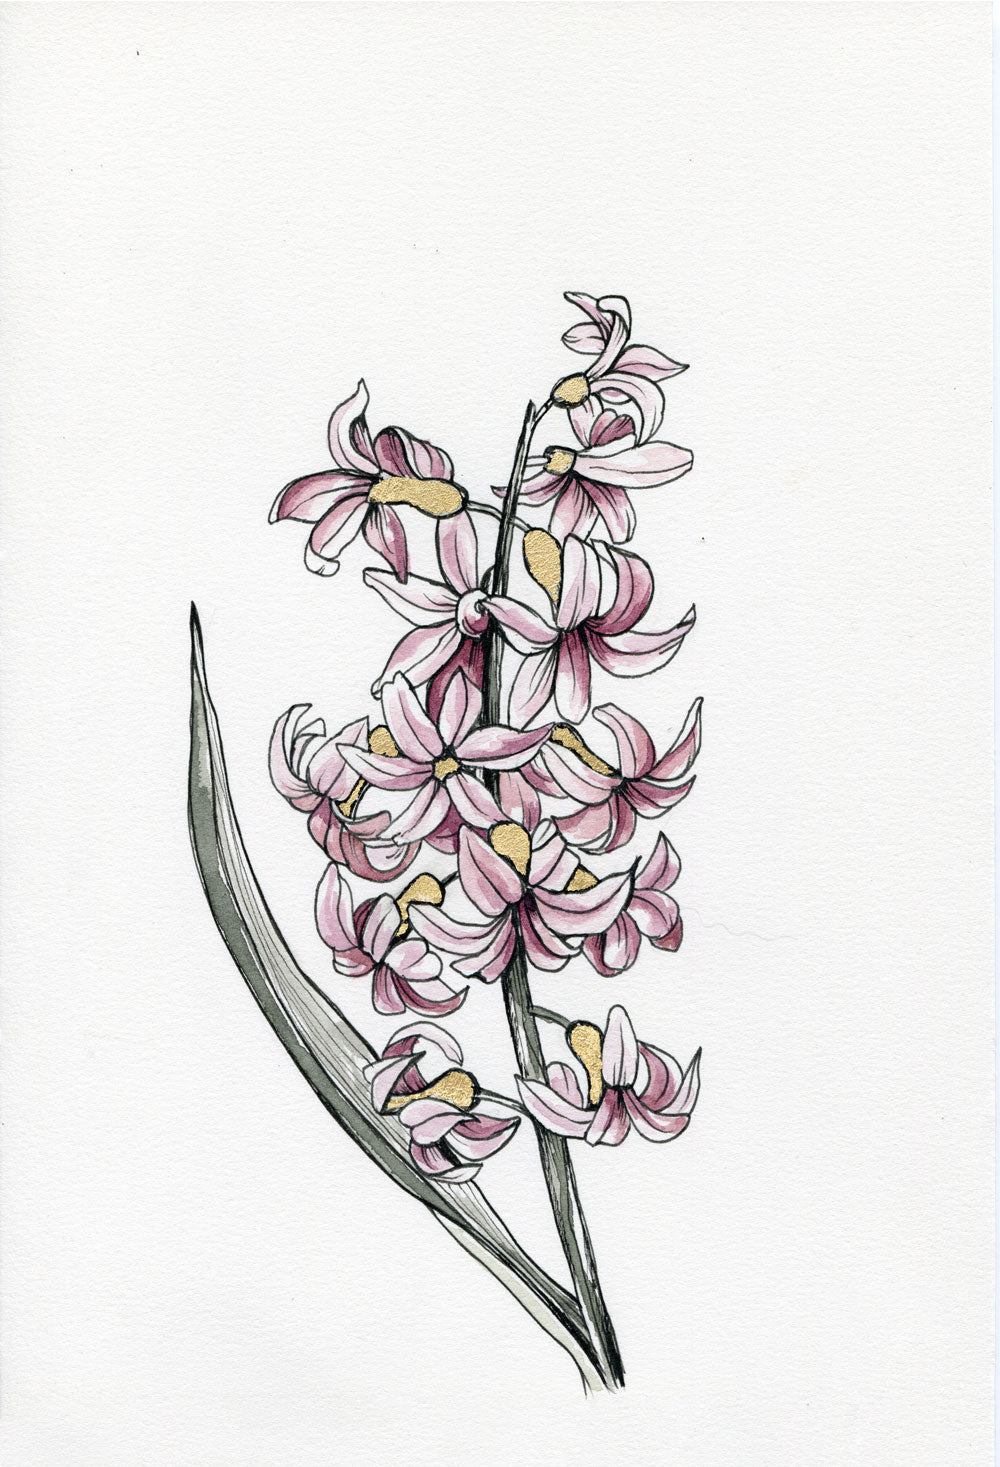 Day 20 - Hyacinth